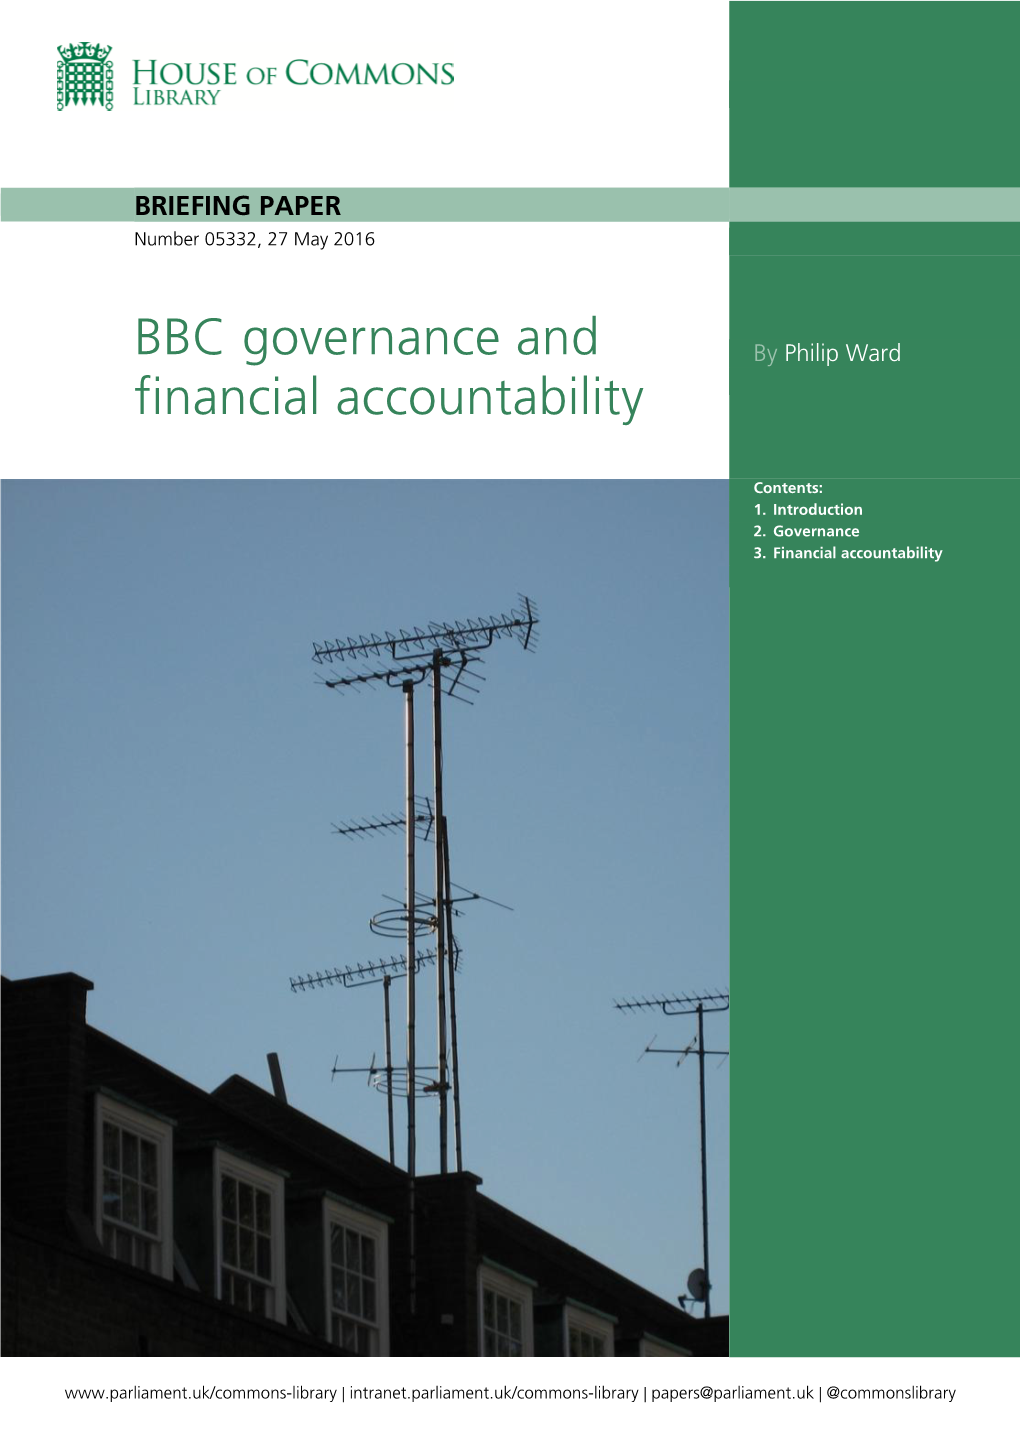 BBC Governance and Financial Accountability